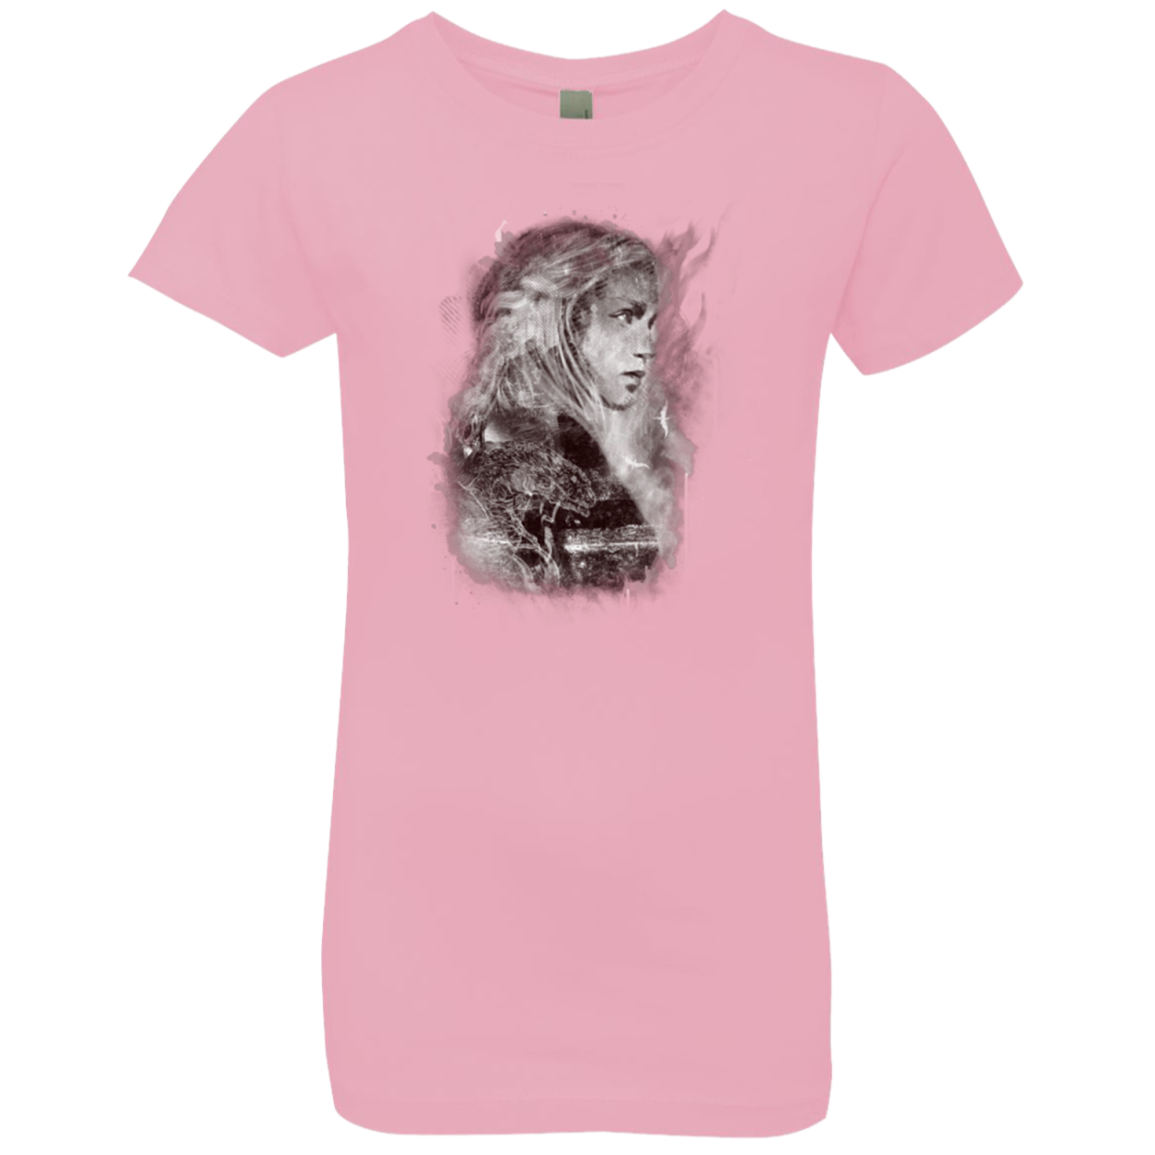 Dracarys Girls Premium T-Shirt